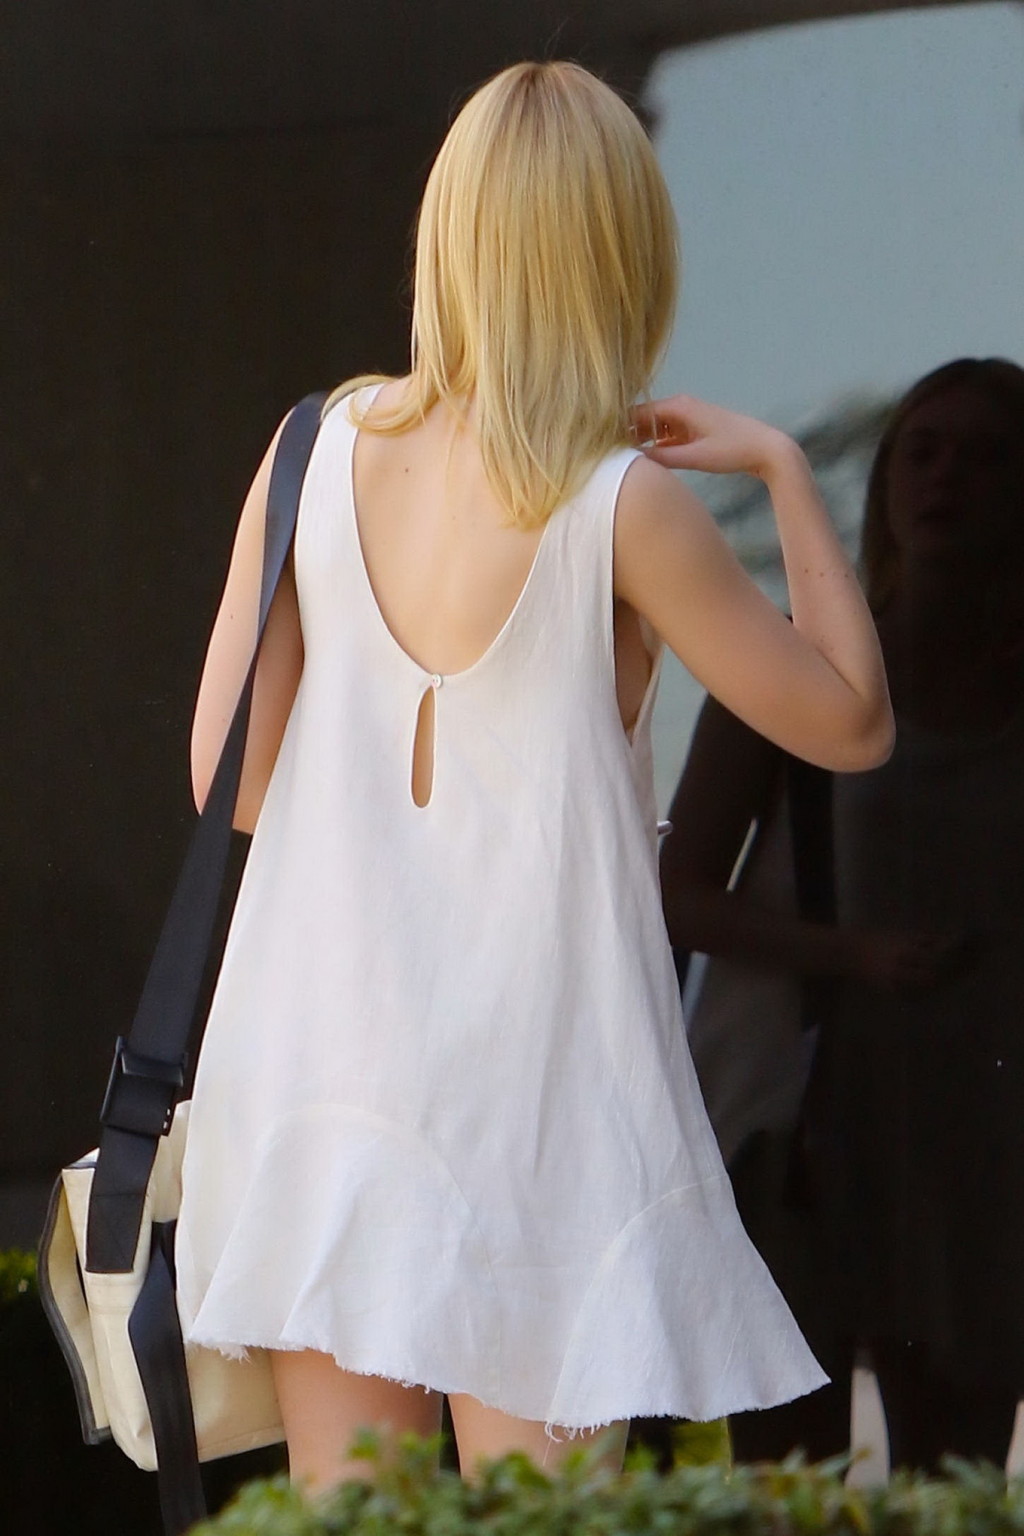 Elle Fanning shows off her bare boob in white mini costume